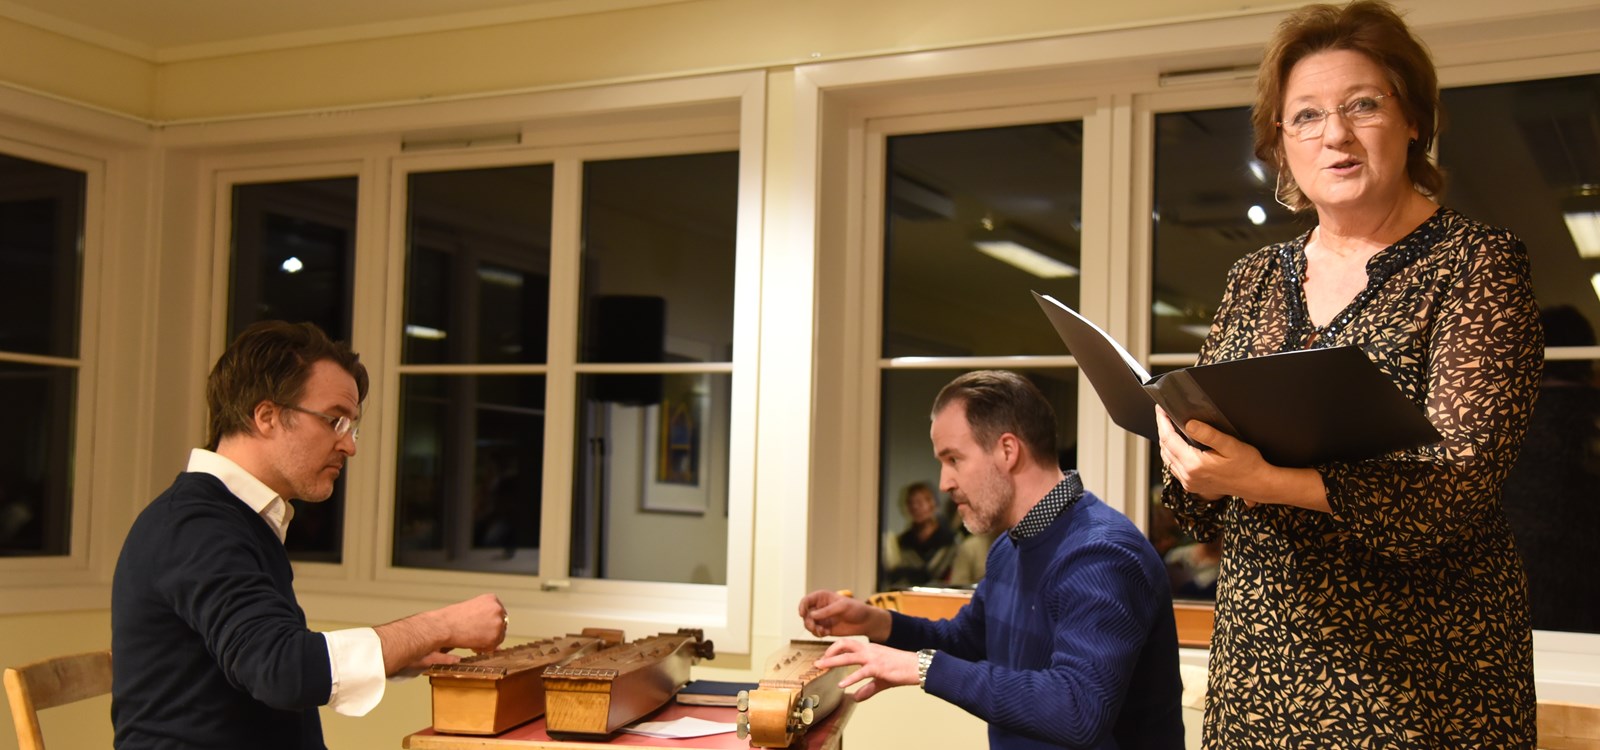 Arnhild Litlere les, mens Ole og Knut Aastad Bråten spelar. Foto: Nils Rogn